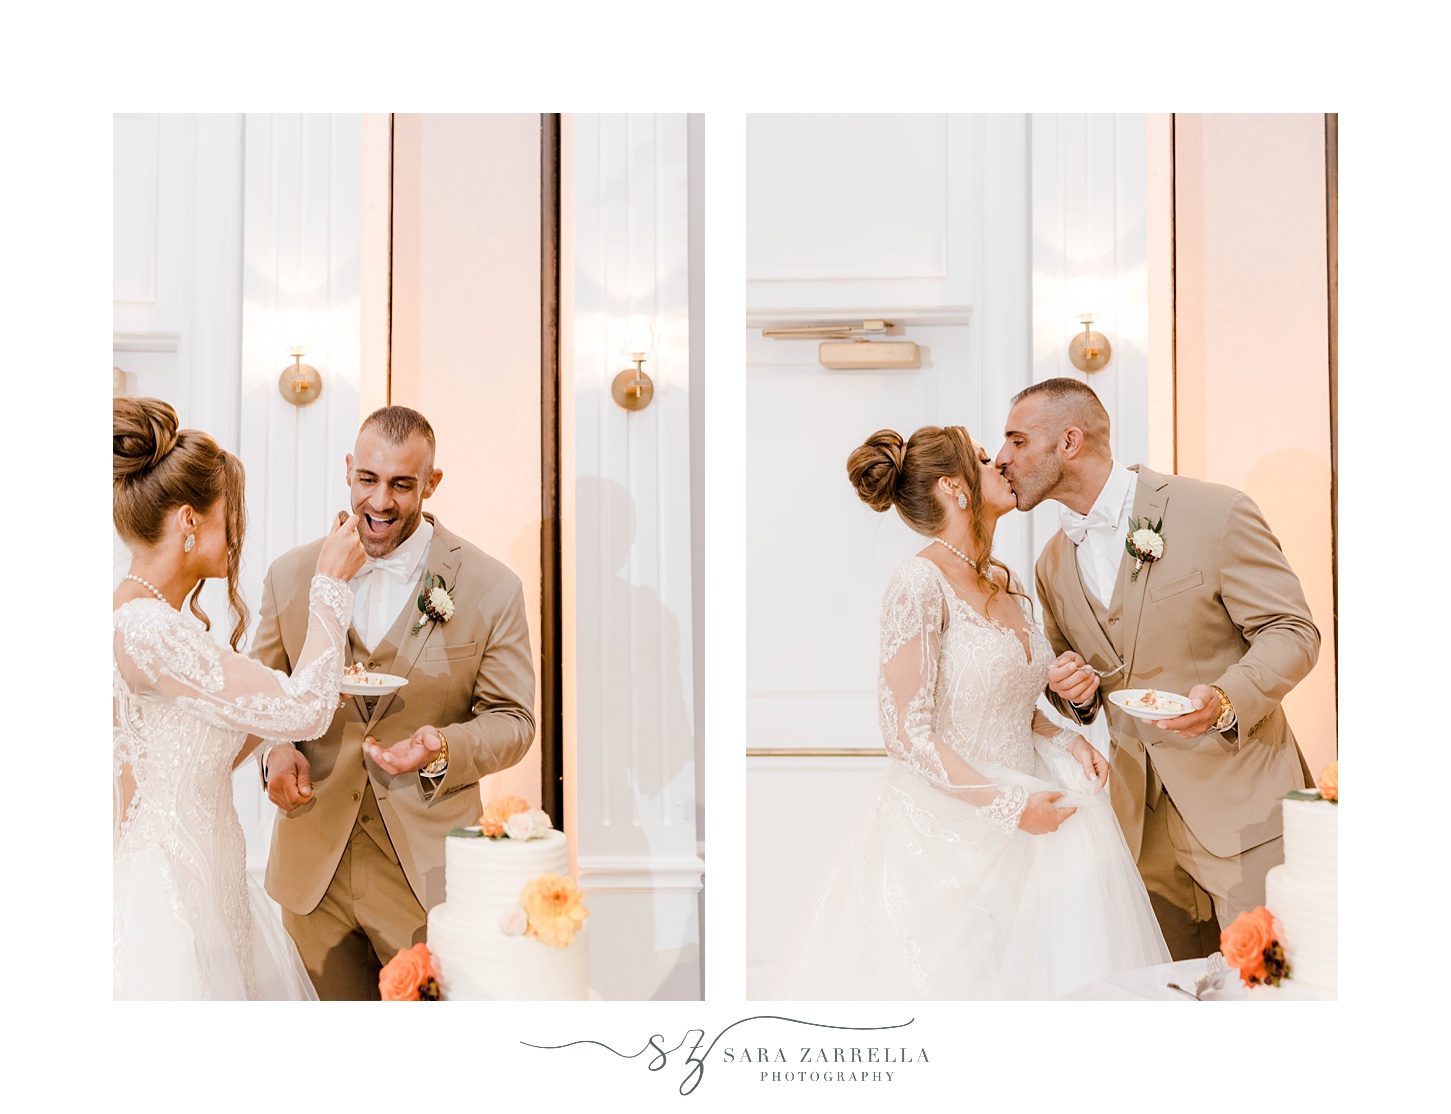 newlyweds kiss during cake cutting at Newport RI wedding reception 